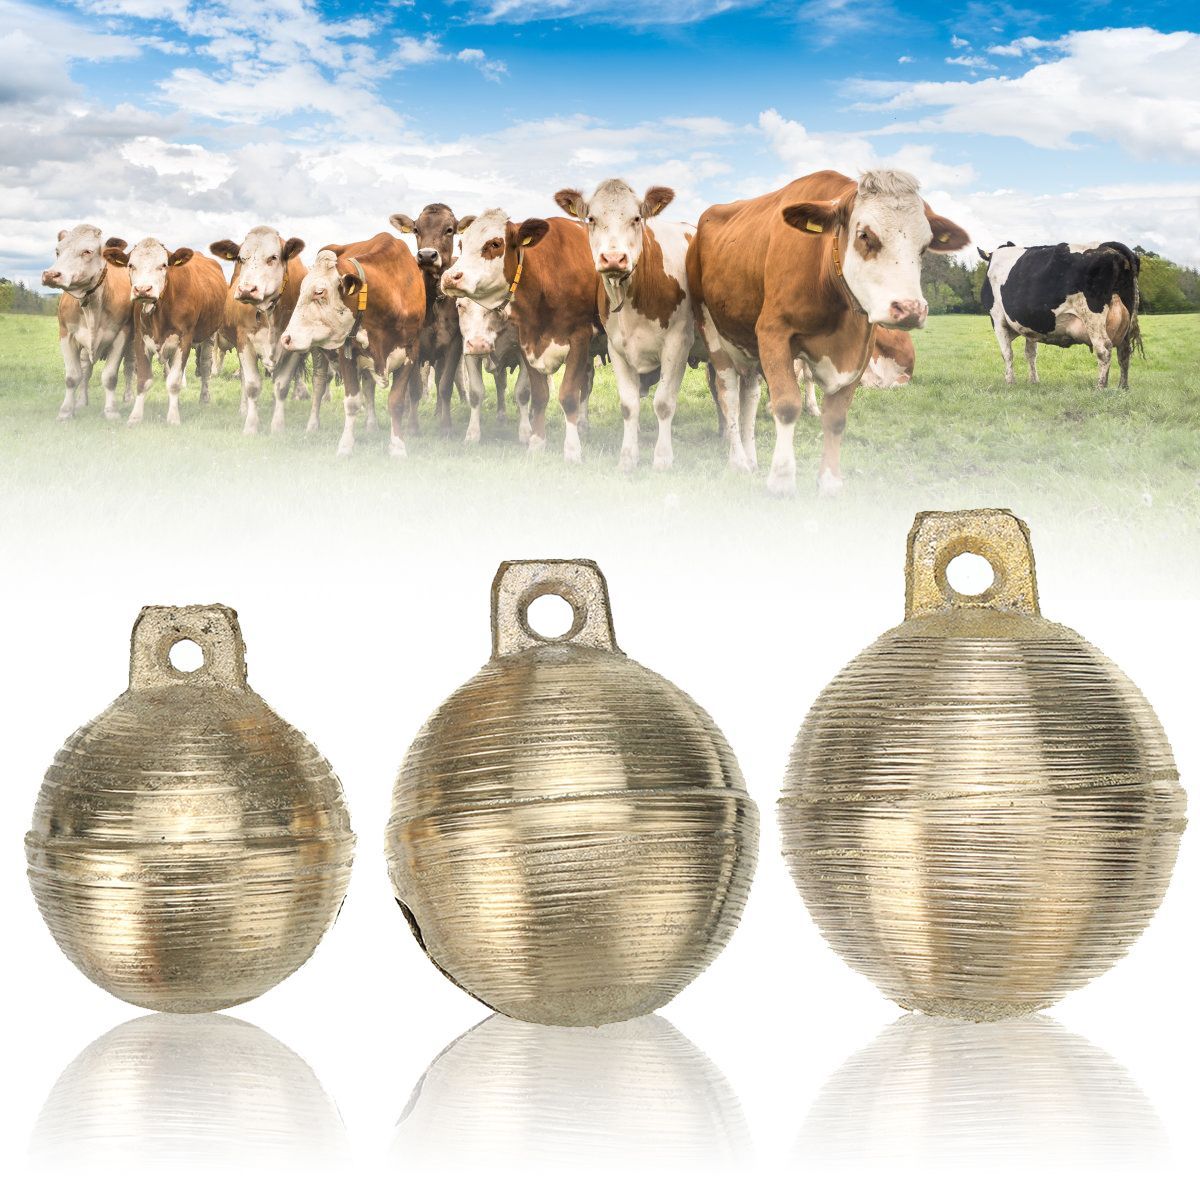 Cow-Horse-Sheep-Dog-Grazing-Copper-Bell-Farm-Animal-Super-Loud-Brass-Bell-Decor-1681263